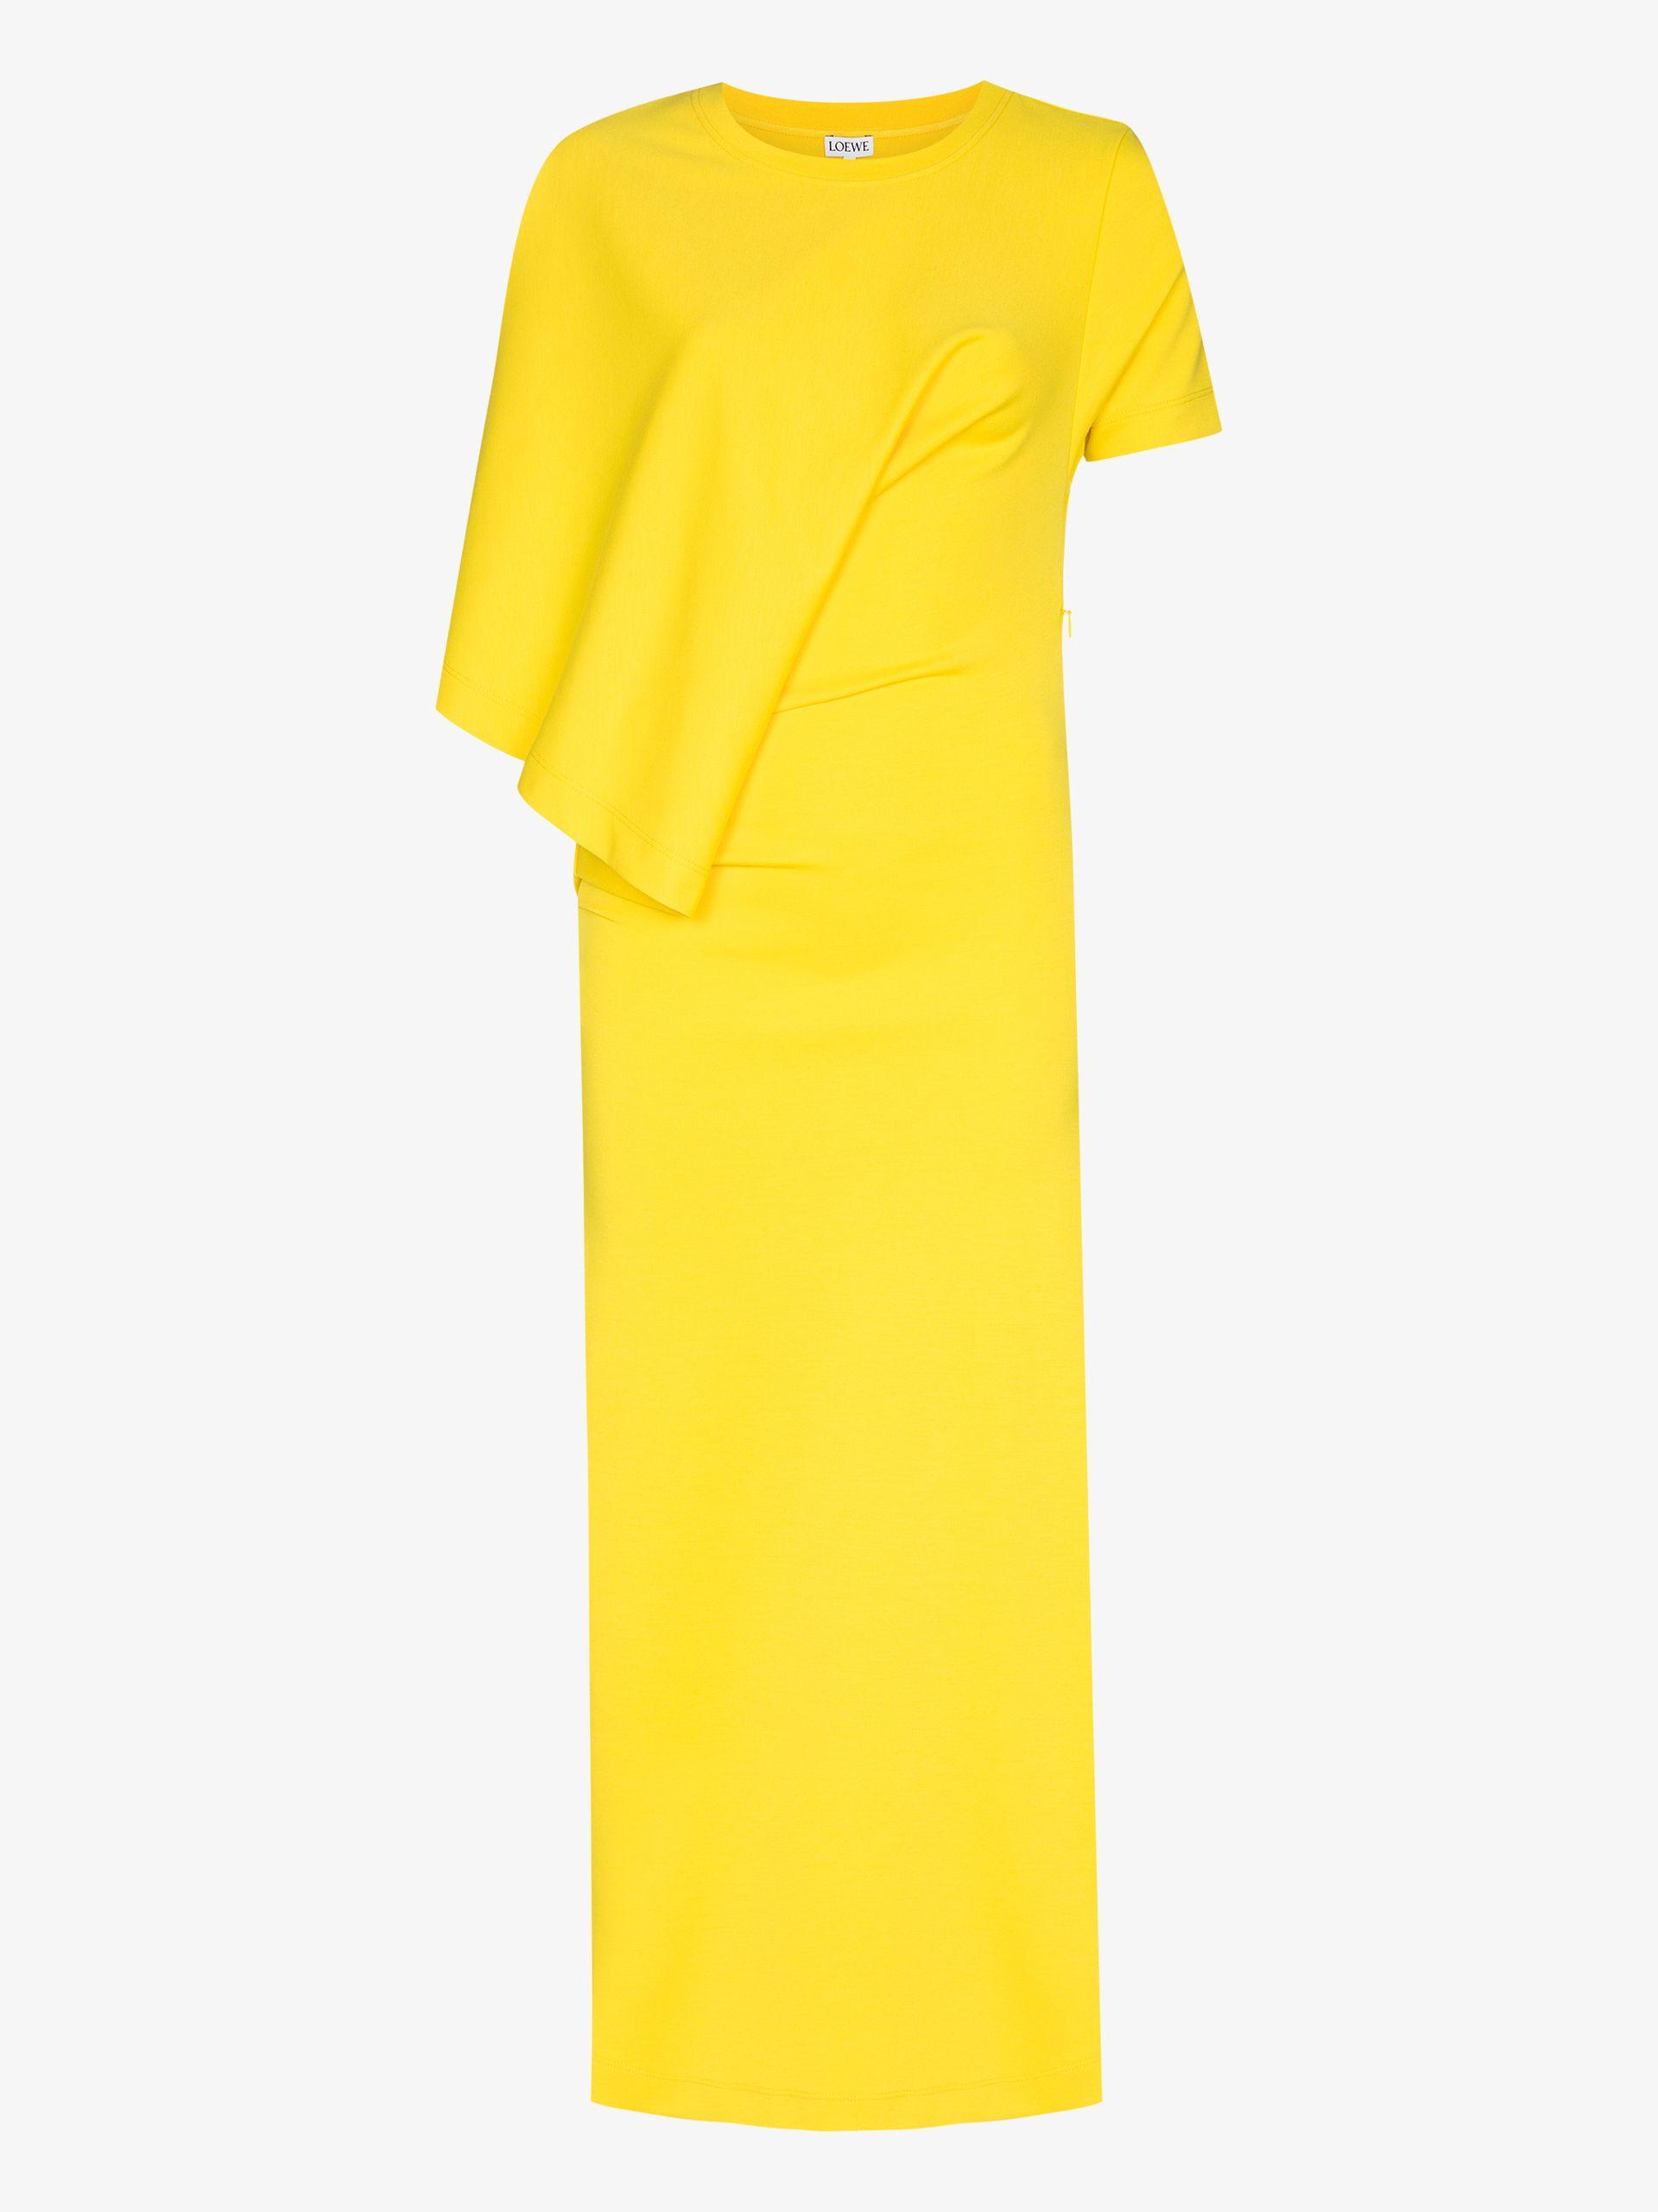 Loewe Synthetic Asymmetric Midi Dress in Yellow - Lyst